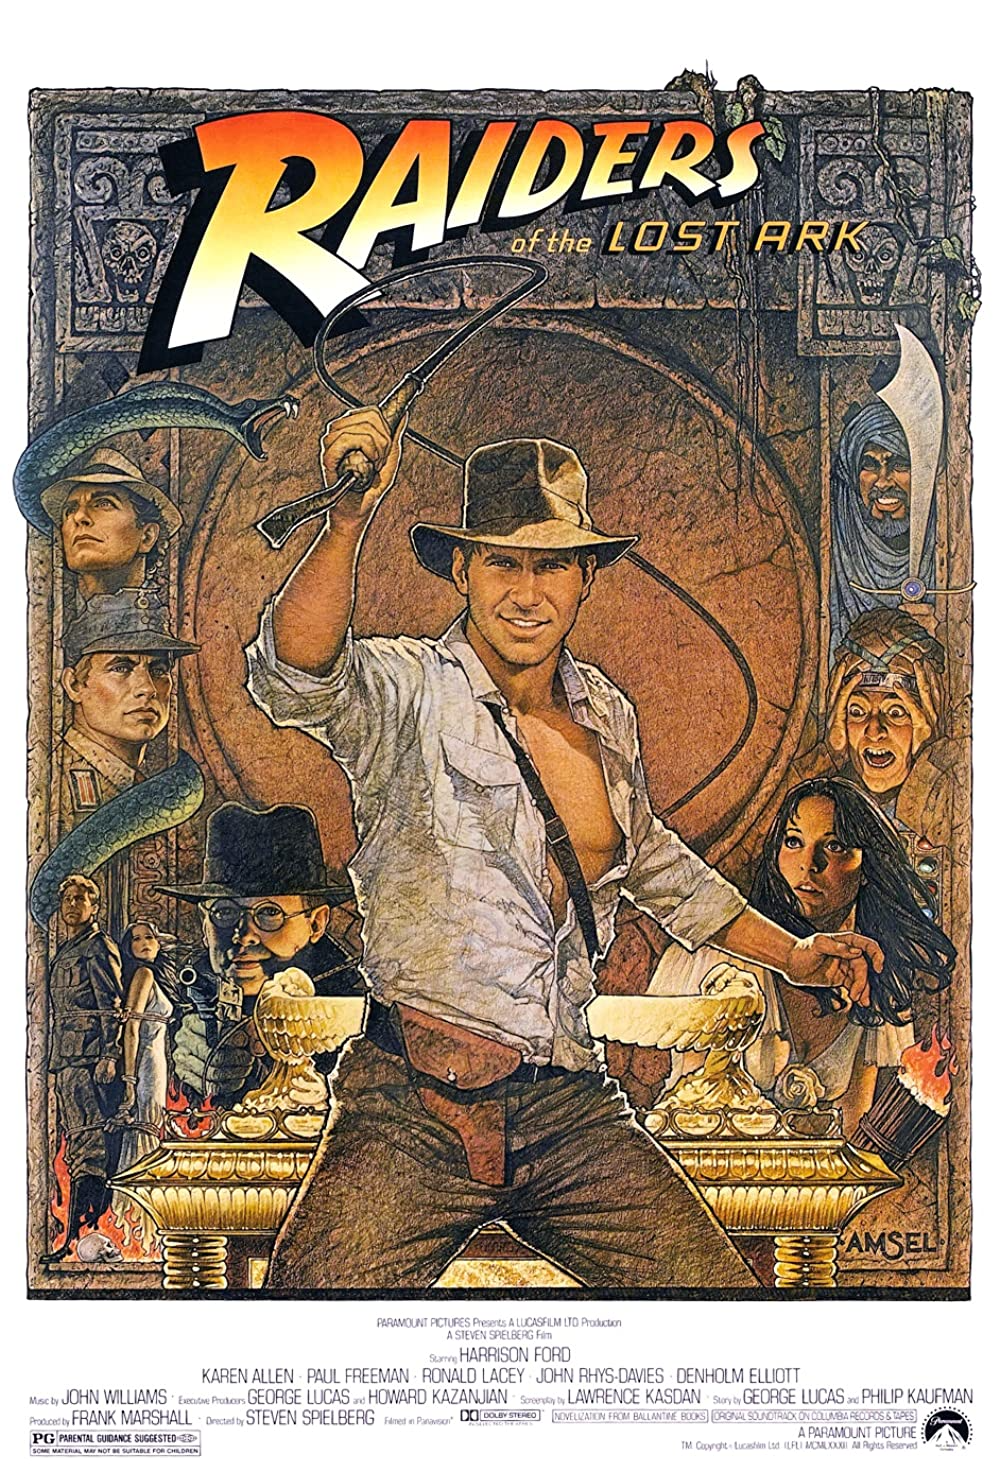 Best Movies On Starz: Indiana Jones